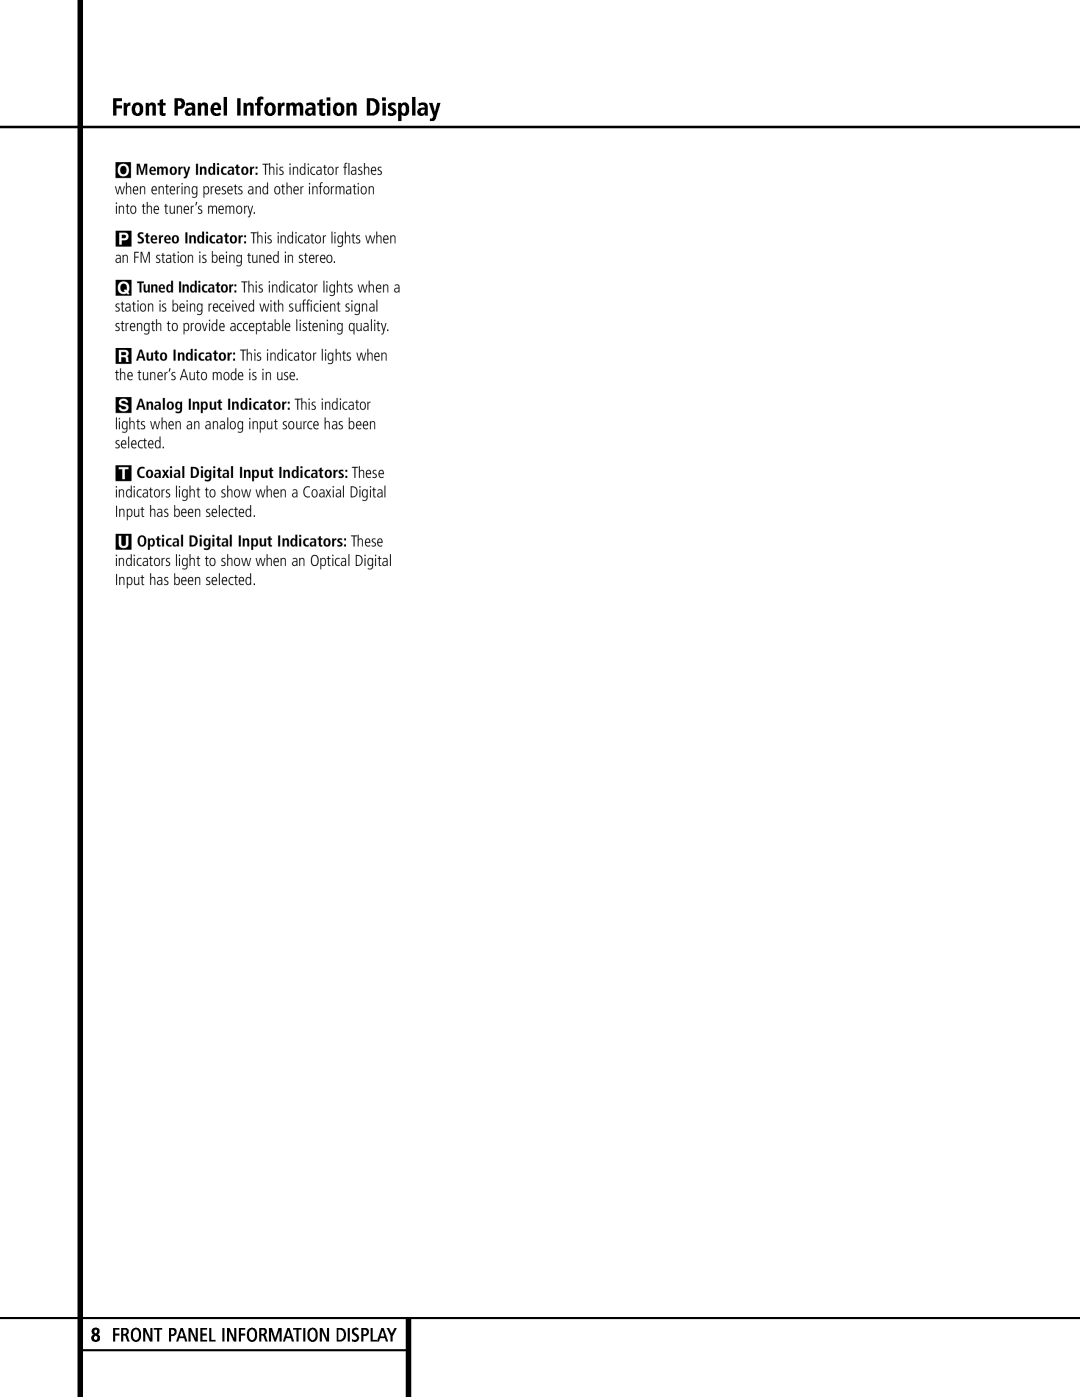 Harman-Kardon AVR 120 owner manual 8FRONT PANEL INFORMATION DISPLAY, Front Panel Information Display 